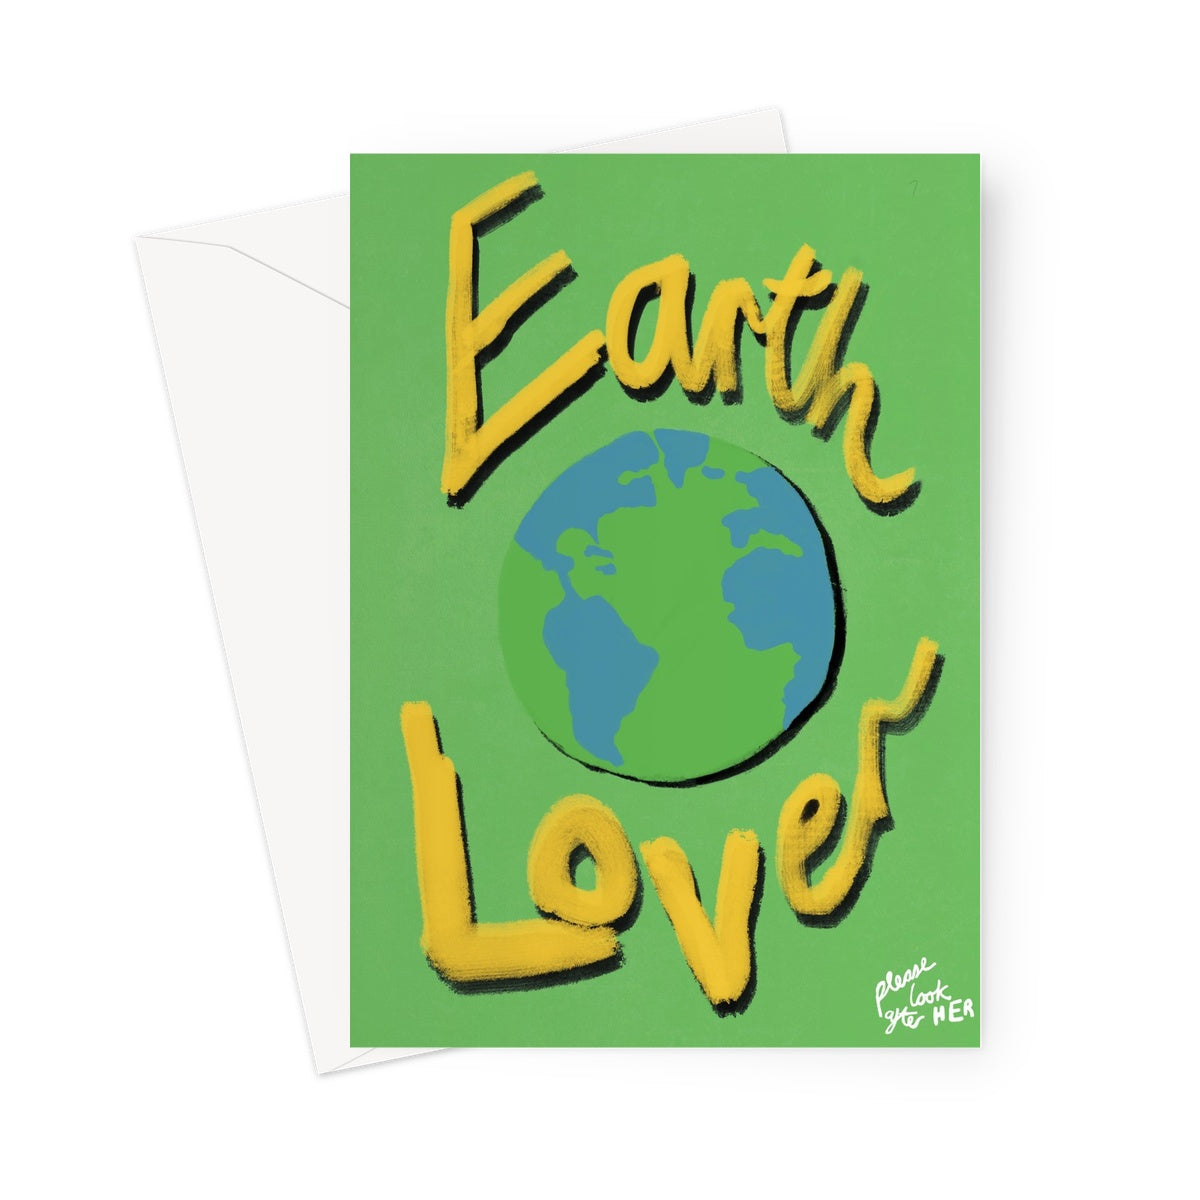 Earth Lover Print - Green, Yellow Greeting Card